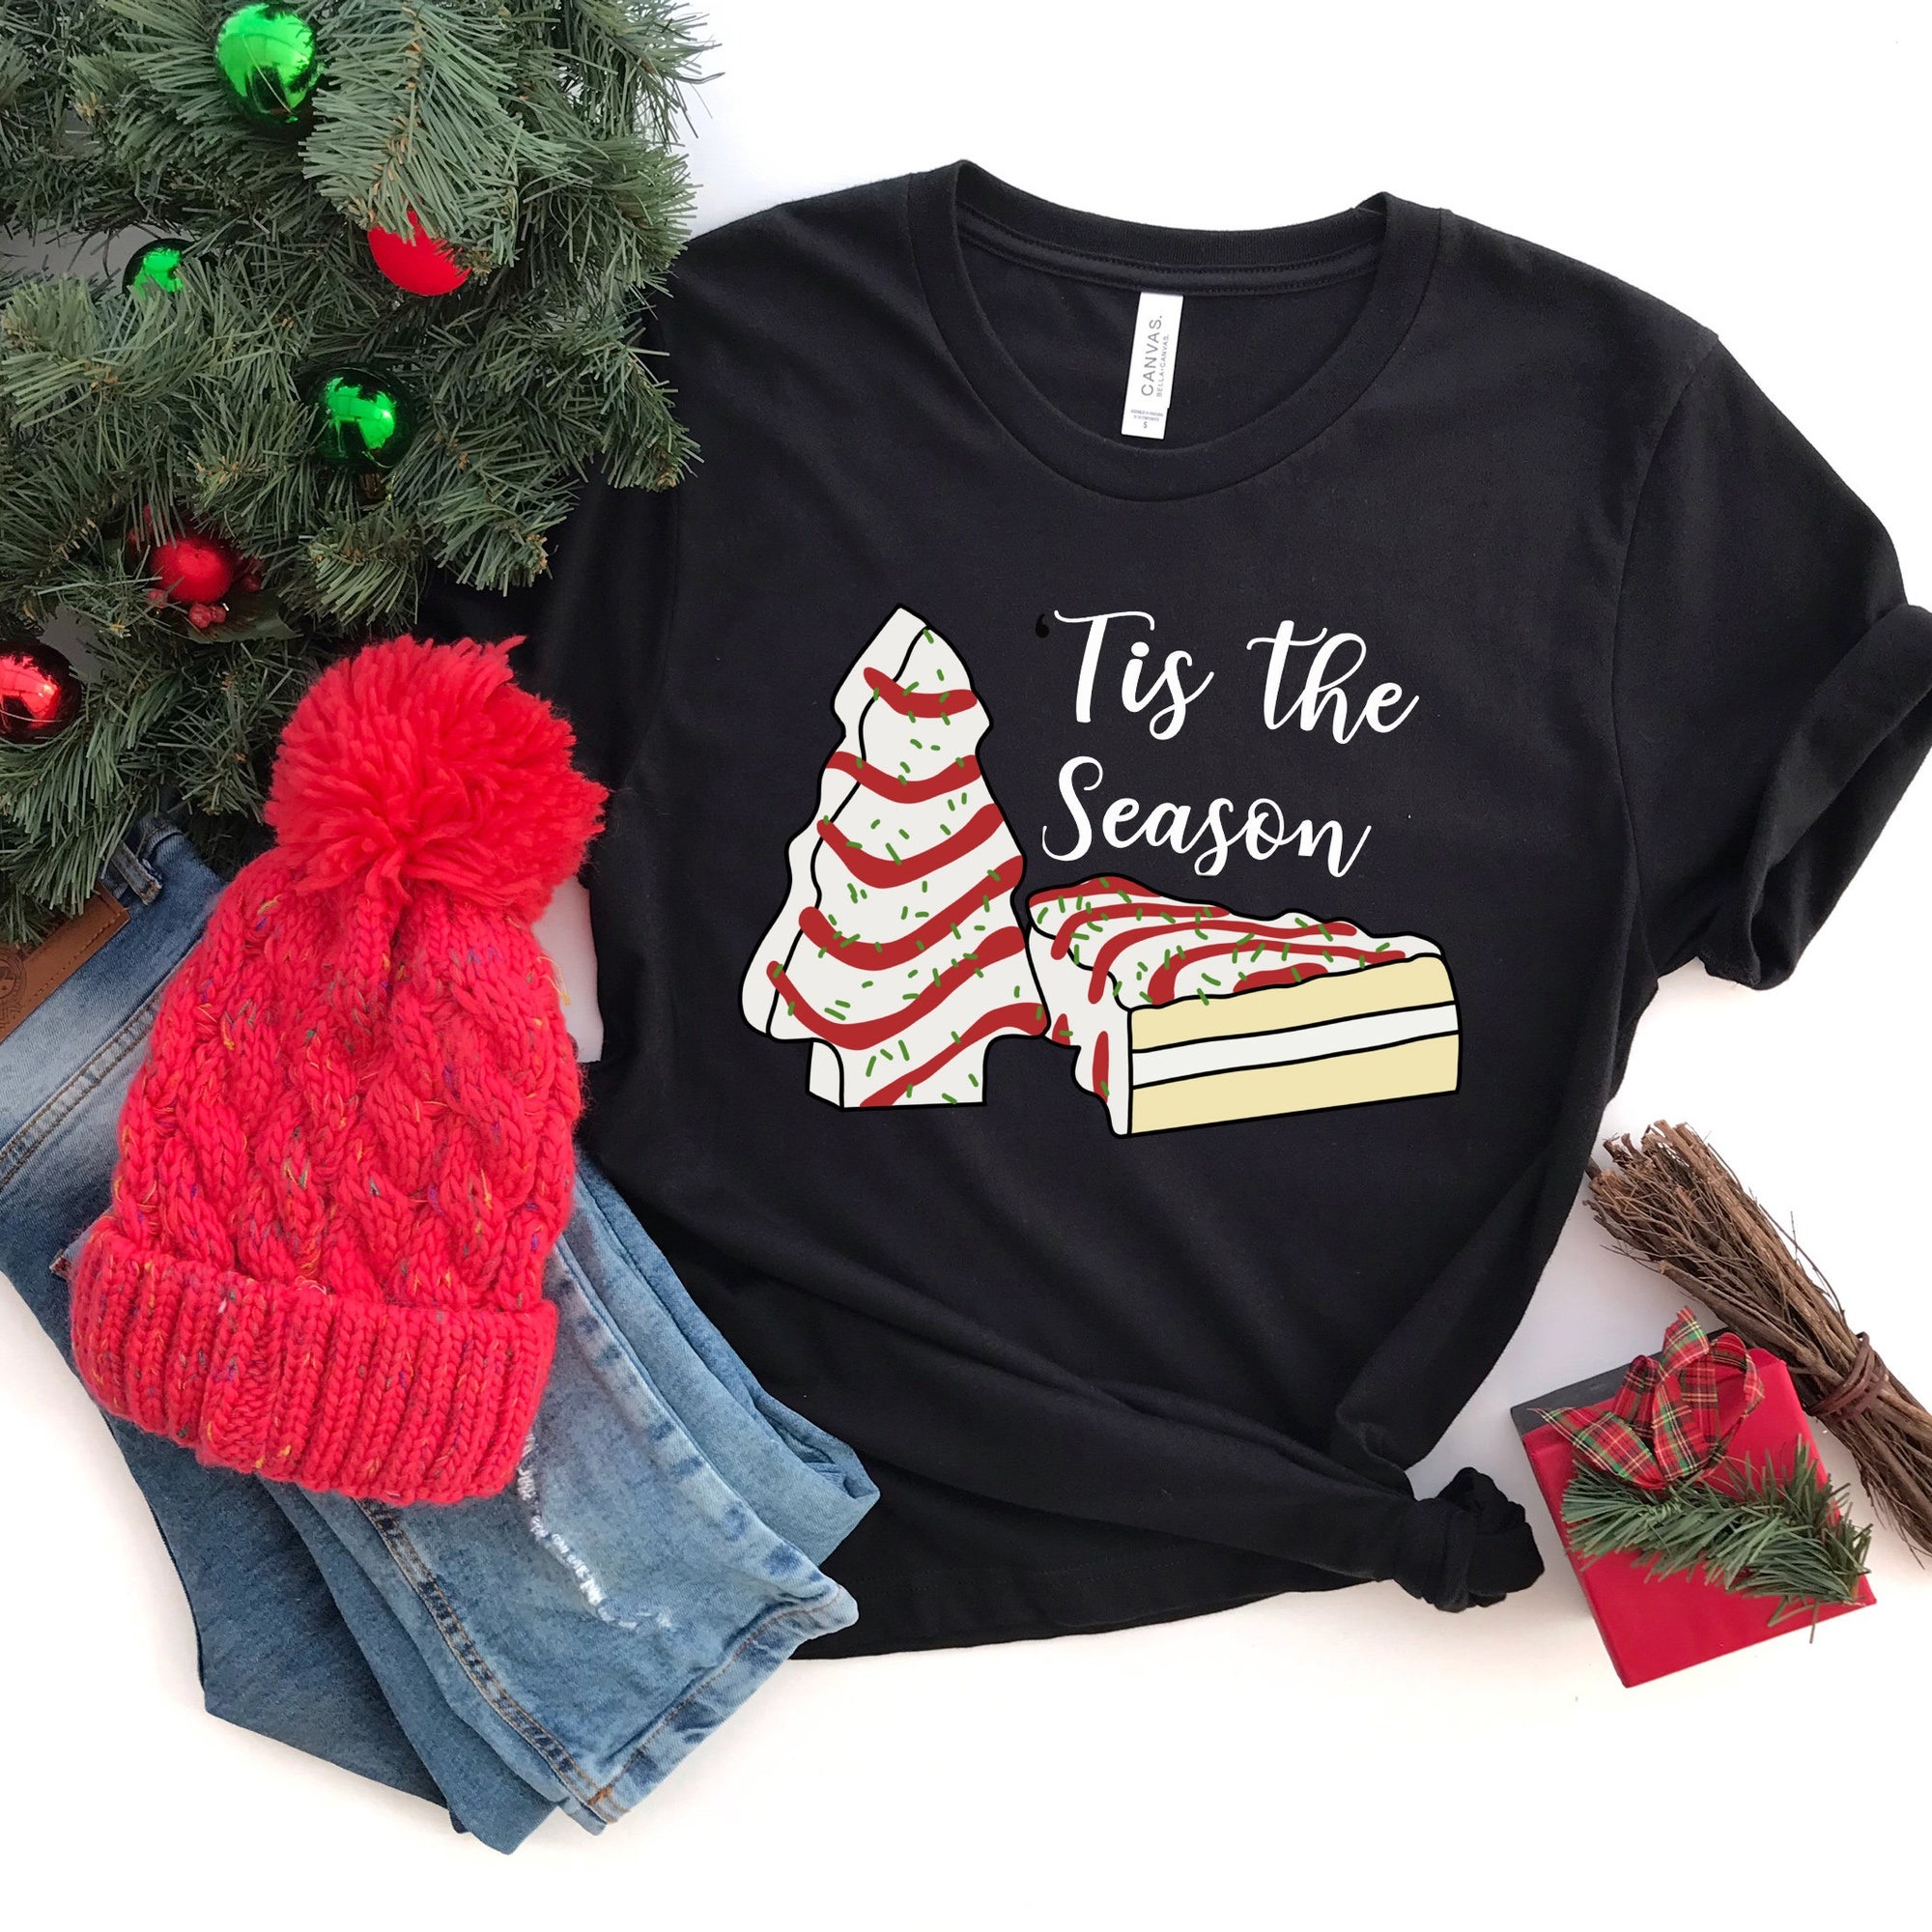 Tis The Season, ‘Tis the Season Sweatshirt, Christmas Sweatshirt, Christmas, Christmas Cake Sweatshirt, Funny Christmas Sweatshirt